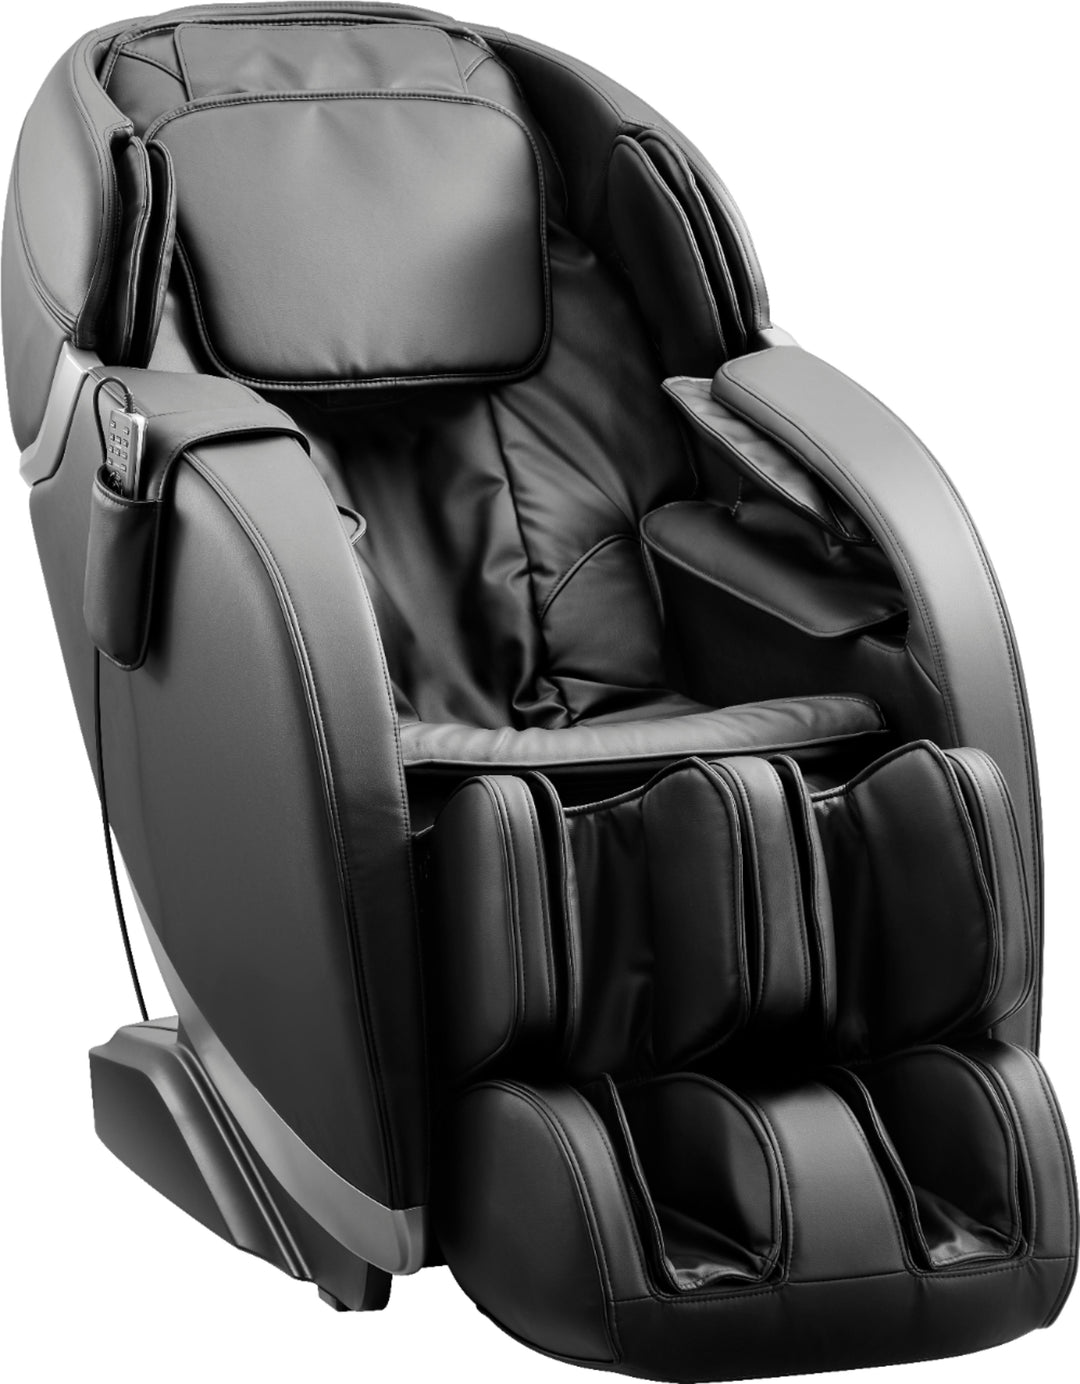 Insignia™ - 2D Zero Gravity Full Body Massage Chair - Black with silver trim_0